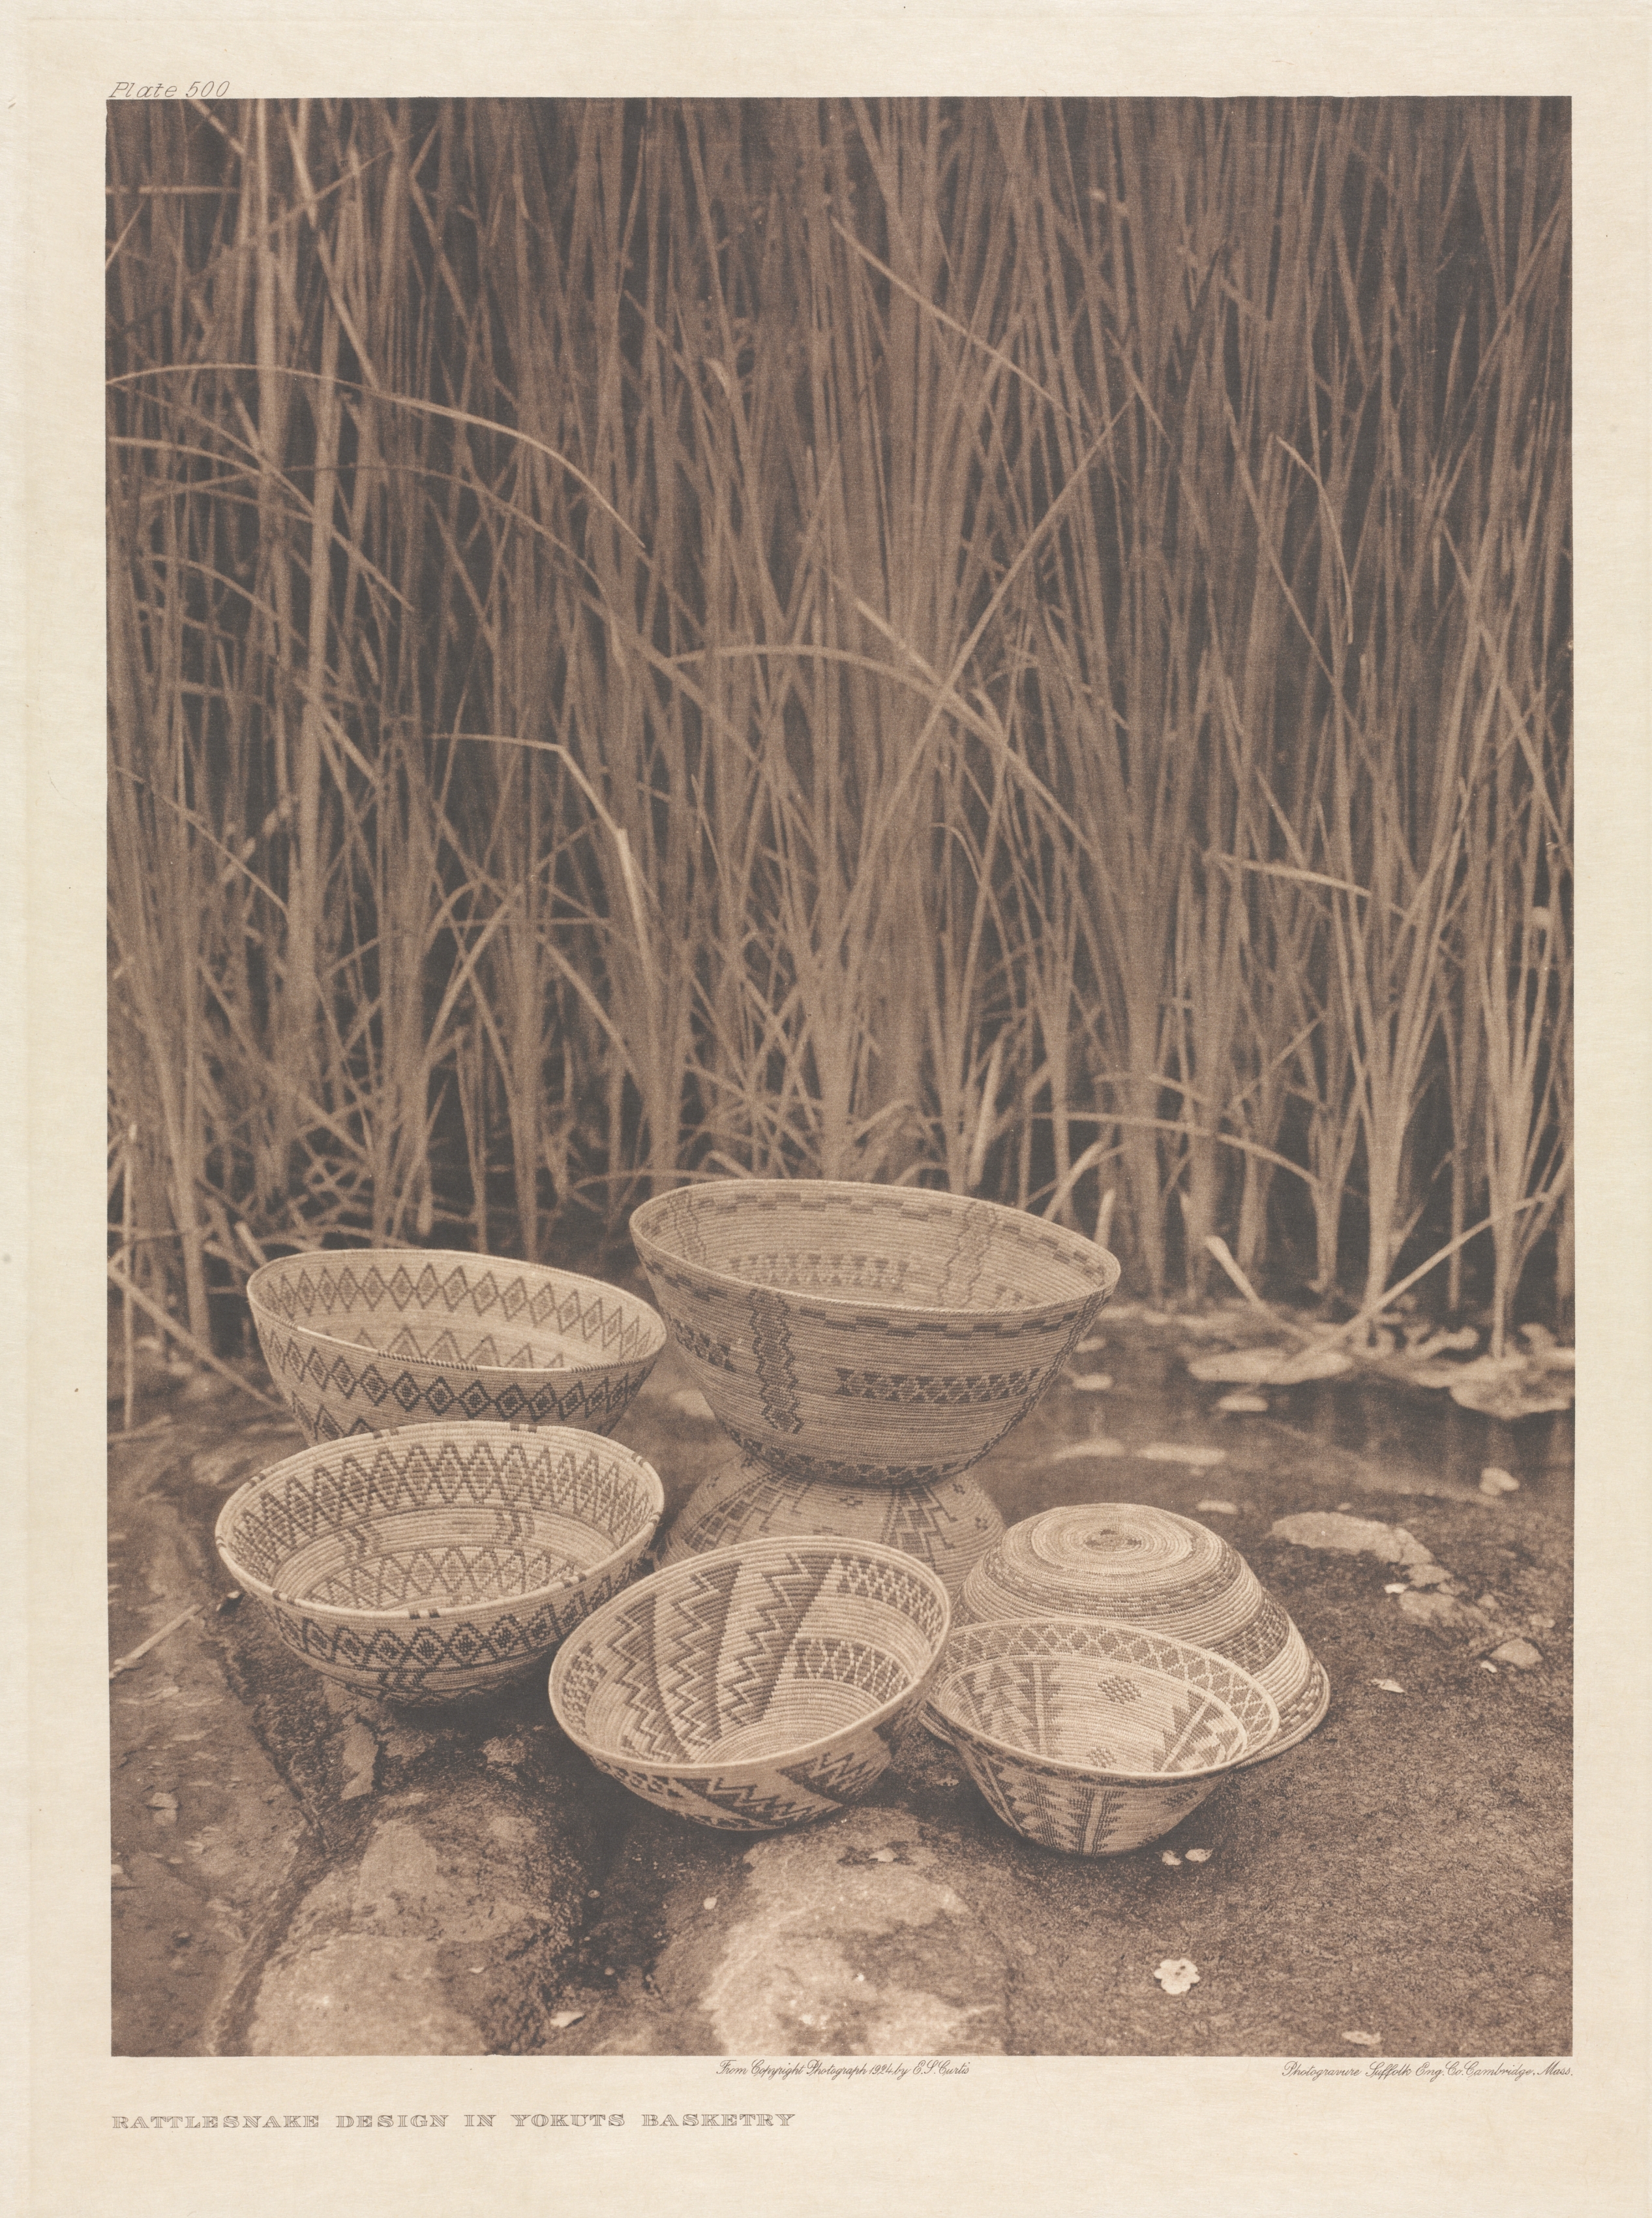 Portfolio XIV, Plate 500: Rattlesnake Design in Yokuts Basketry